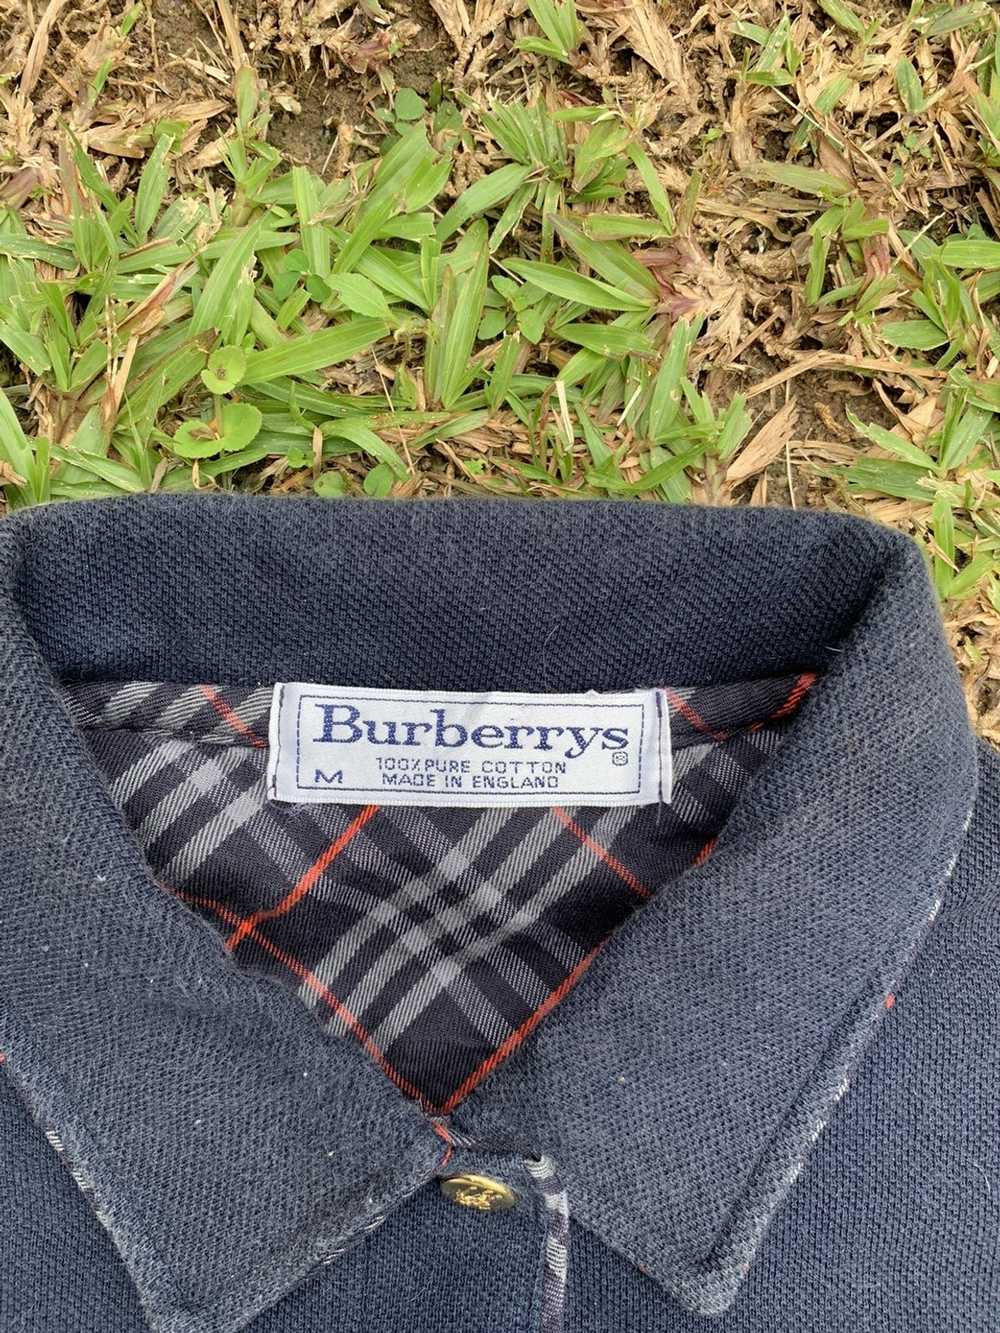 Burberry × Very Rare × Vintage VTG SHIRT BUTTON B… - image 4